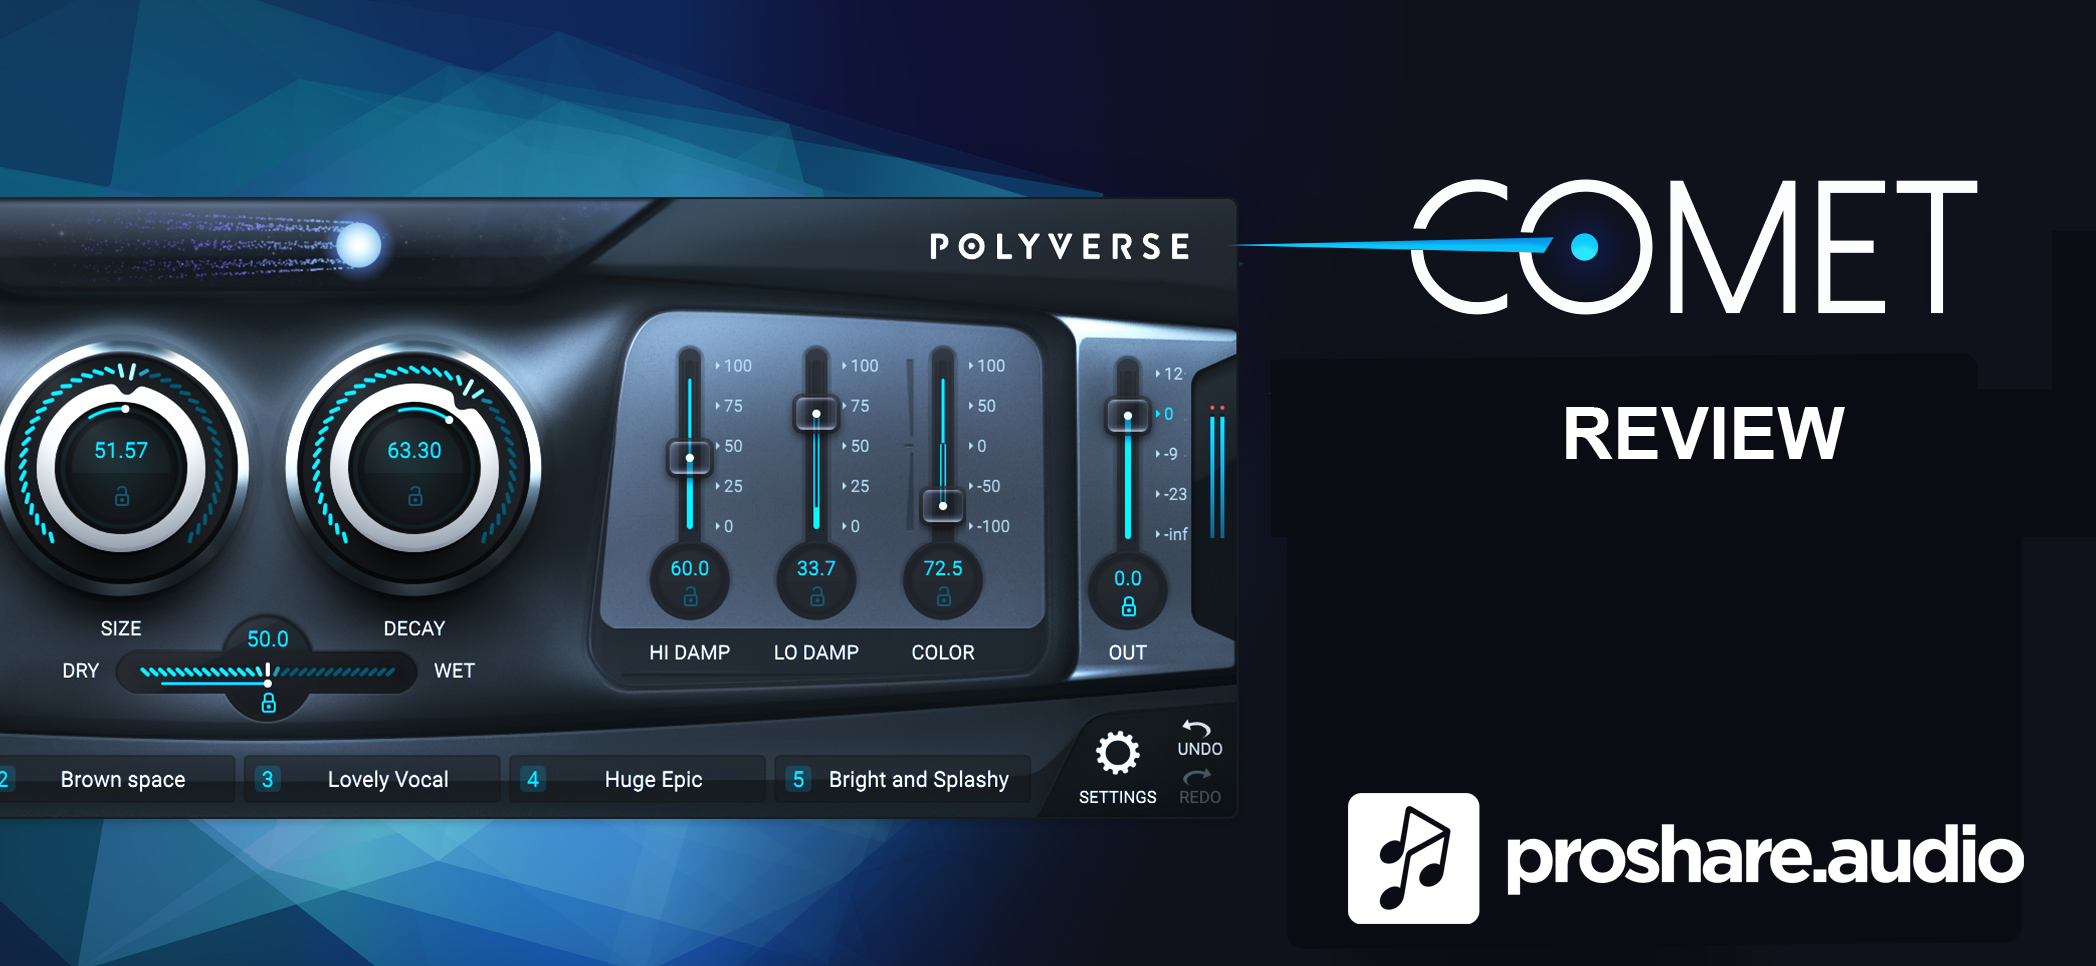 Polyverse - Comet (giveaway!)